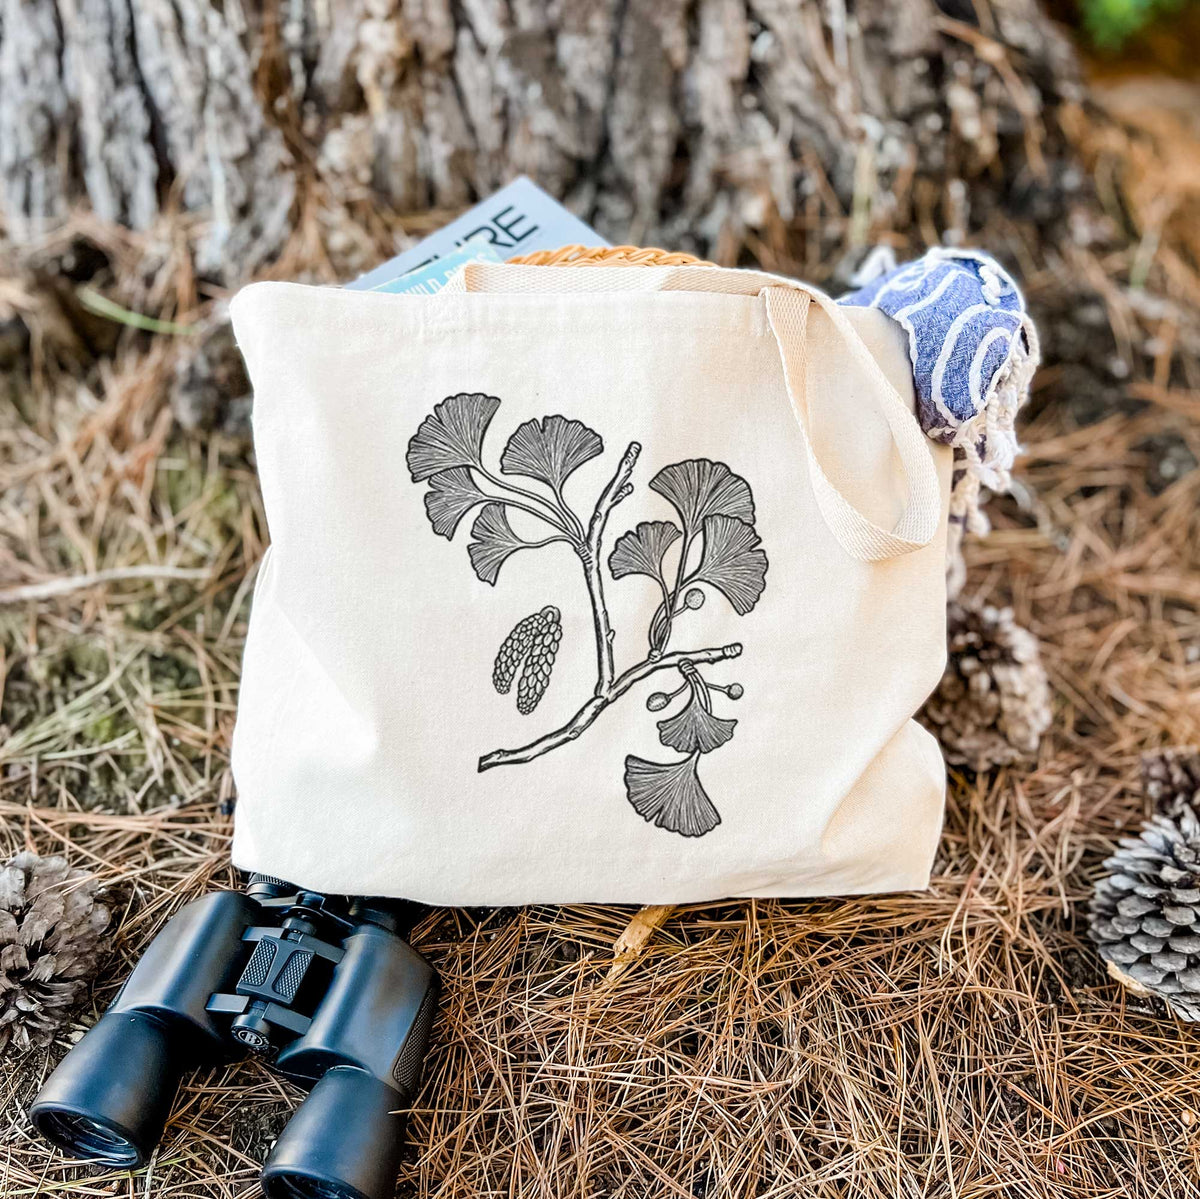 Ginkgo Biloba - Ginkgo Tree Stem with Leaves - Tote Bag